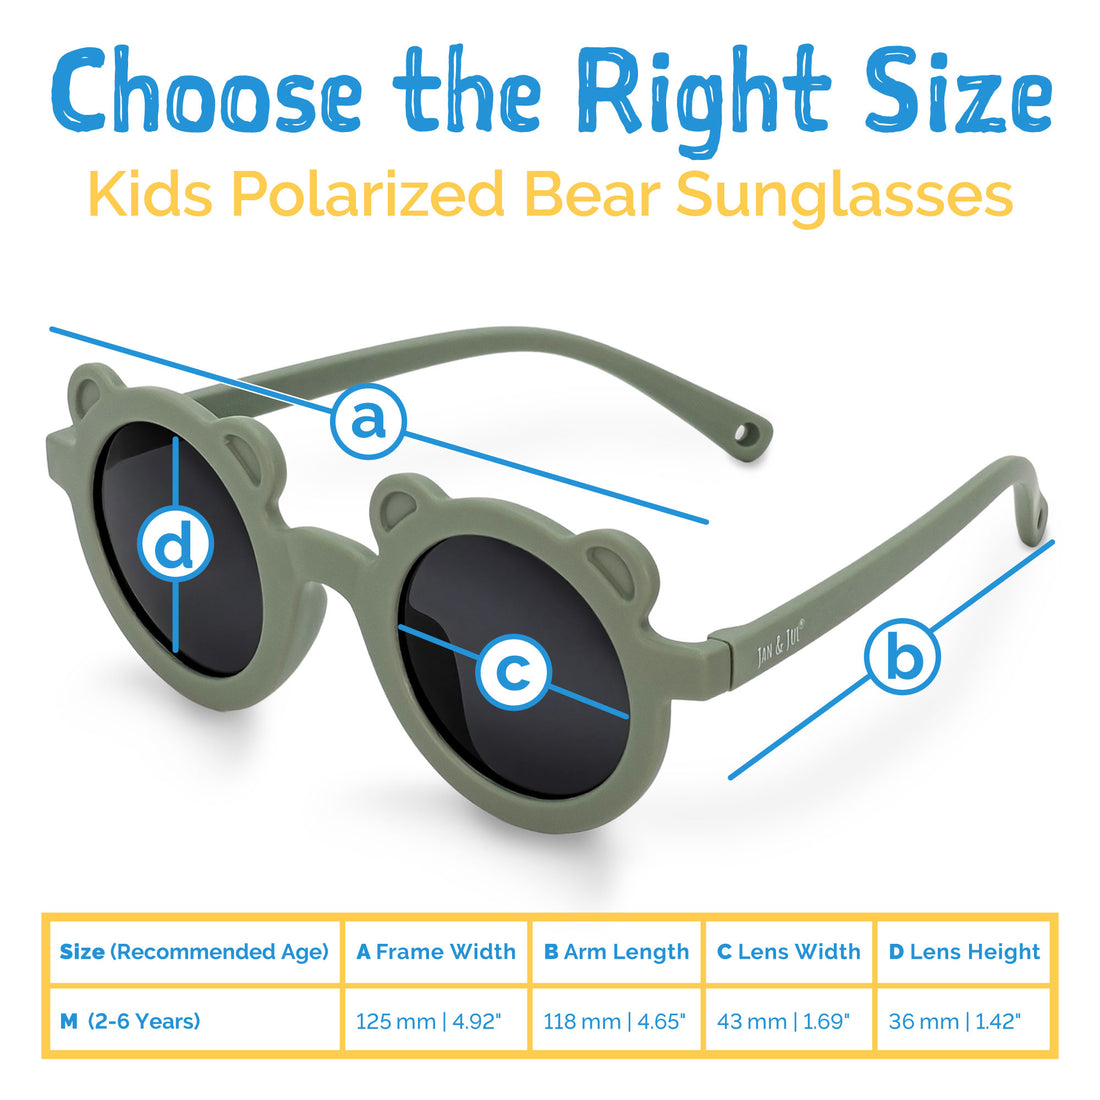 Polarized Bear Sunglasses | Black